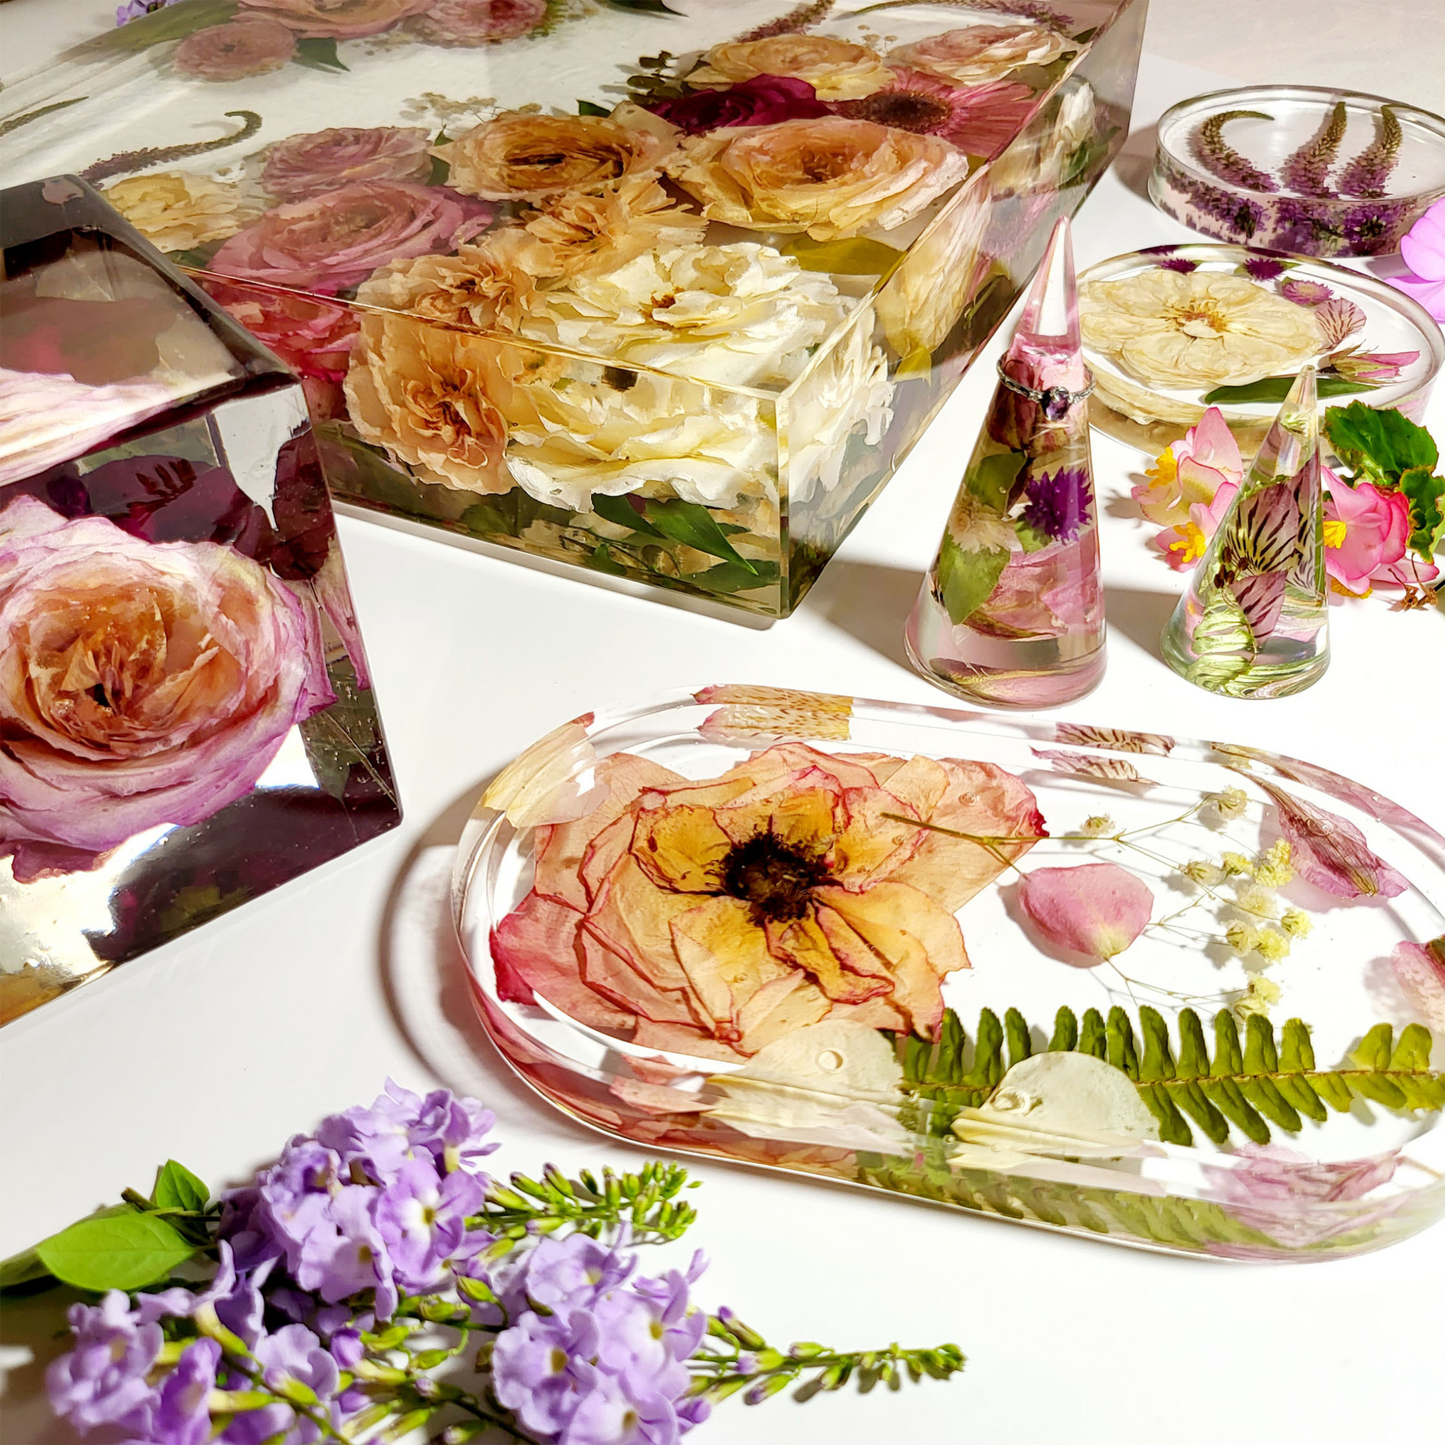 12" x 12" Large 3D Resin Wedding Bouquet Preservation Save Your Florals Wedding Gift Keepsake - flofloflowery